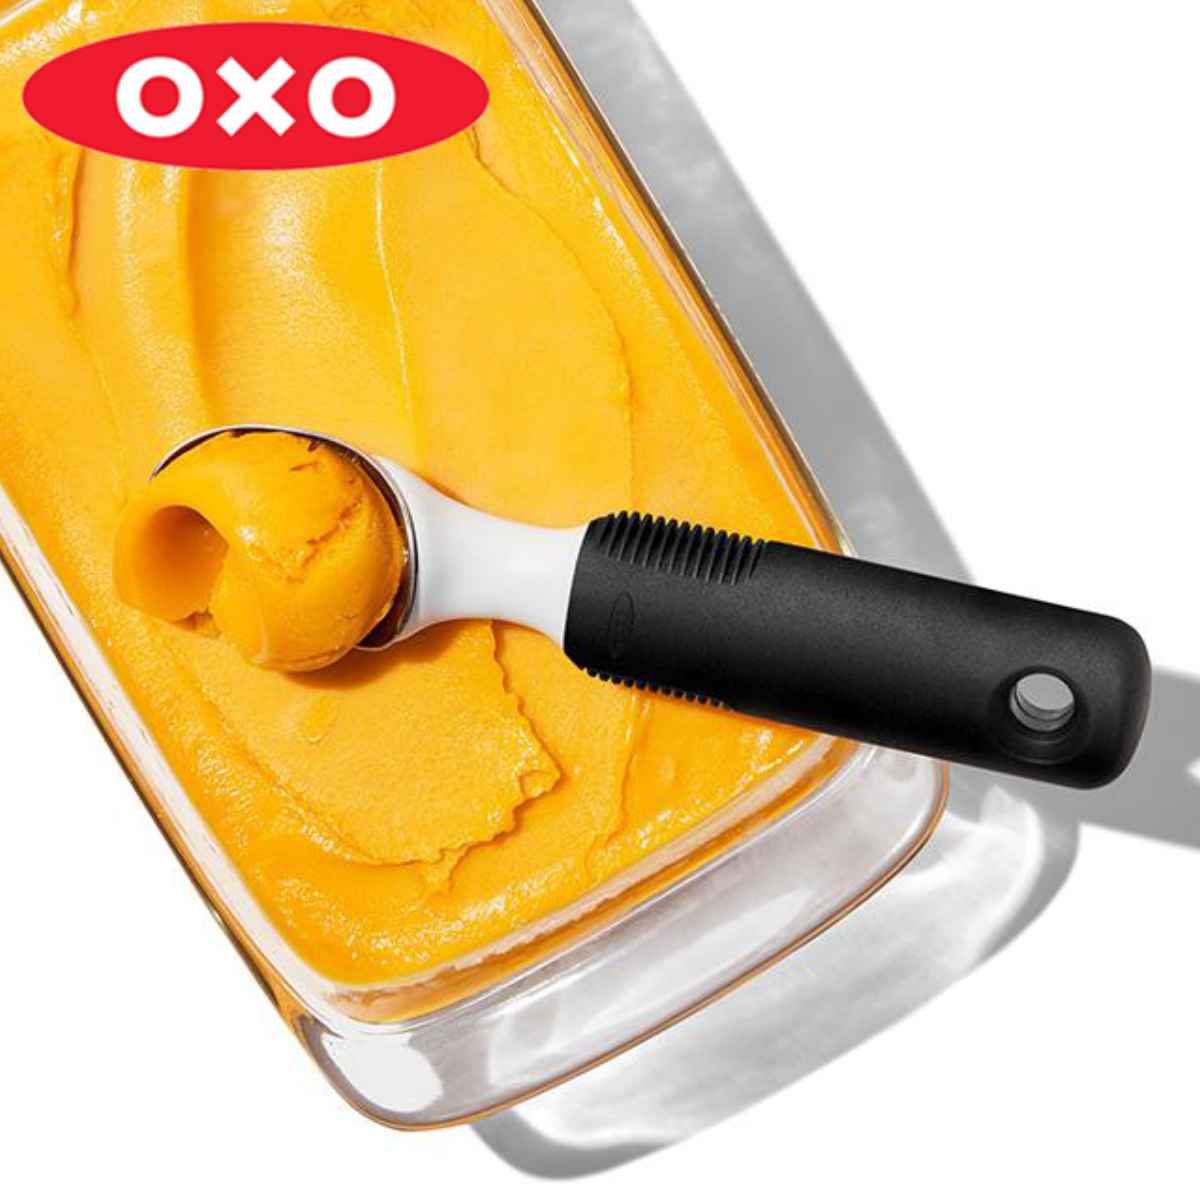 OXO アイスクリームスクープ 20cm ステンレス製 （ オクソー 食洗機対応 スクープ スクーパー アイスクリームディッシャー アイス 盛りつけ アイスクリームスクーパー ディッシャー 氷菓 アイスクリーム すくう ）画像